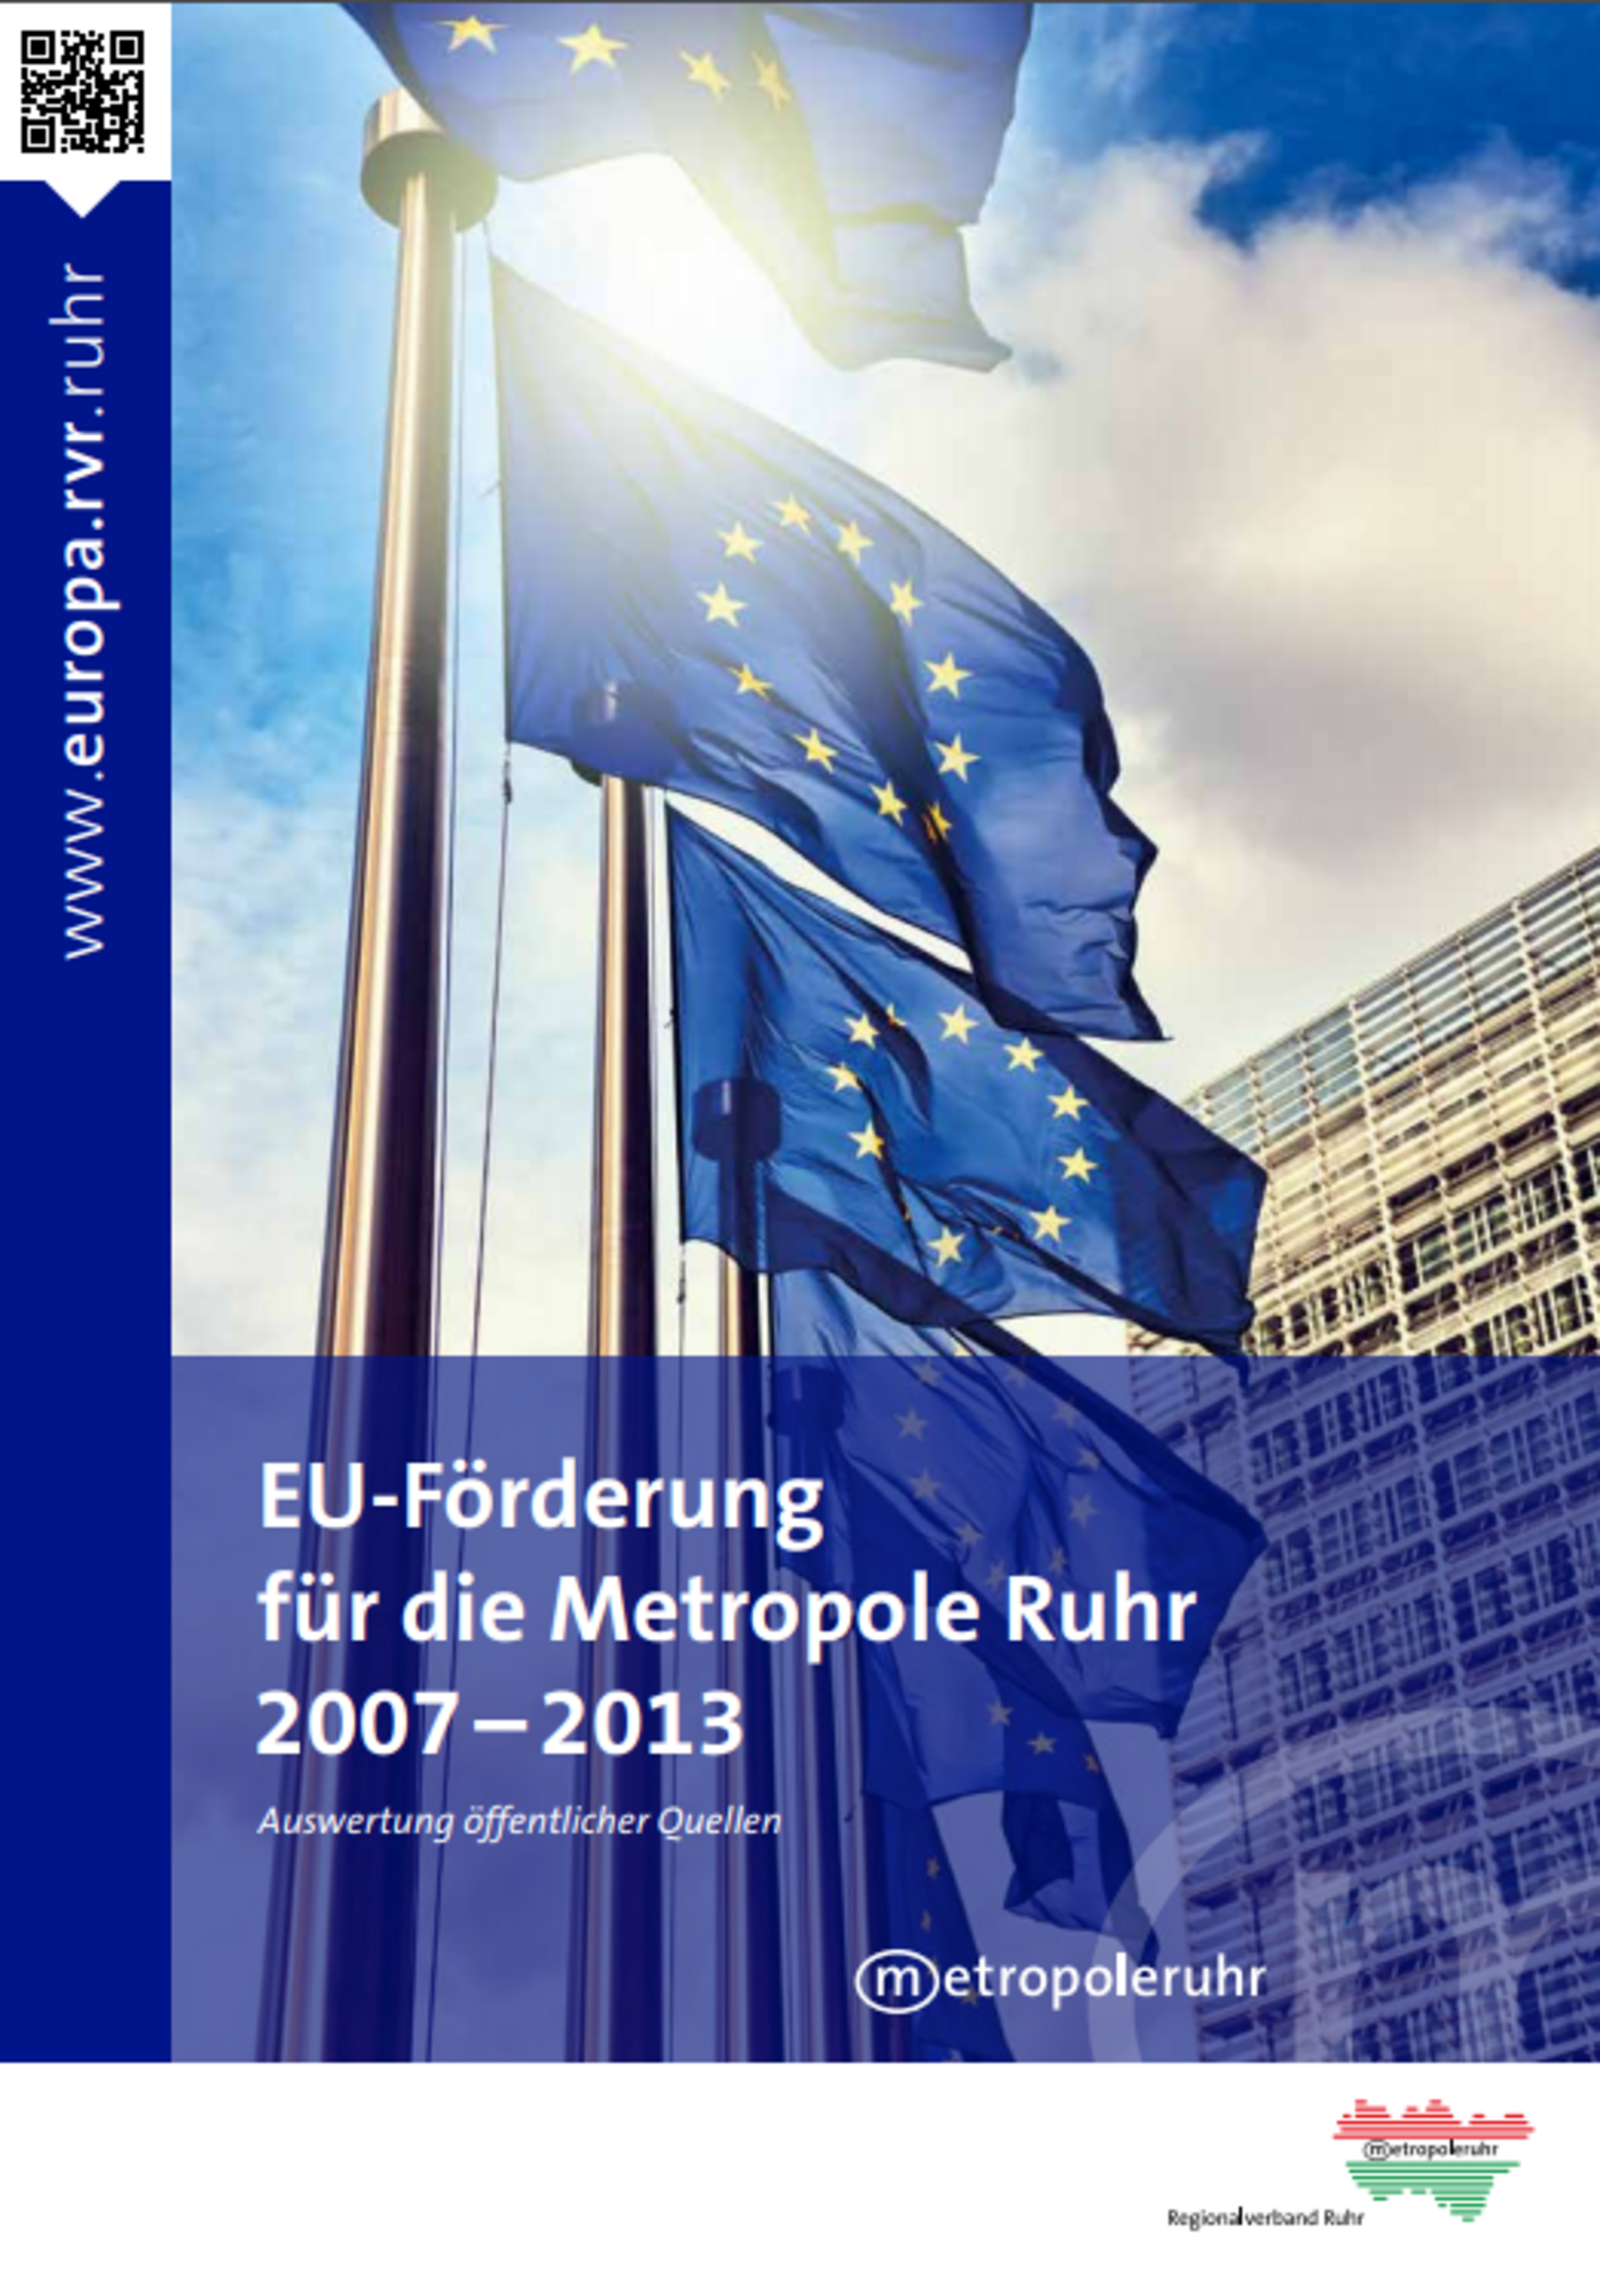 Download: EU-Fördermittelbilanz 2007-2013 (PDF)